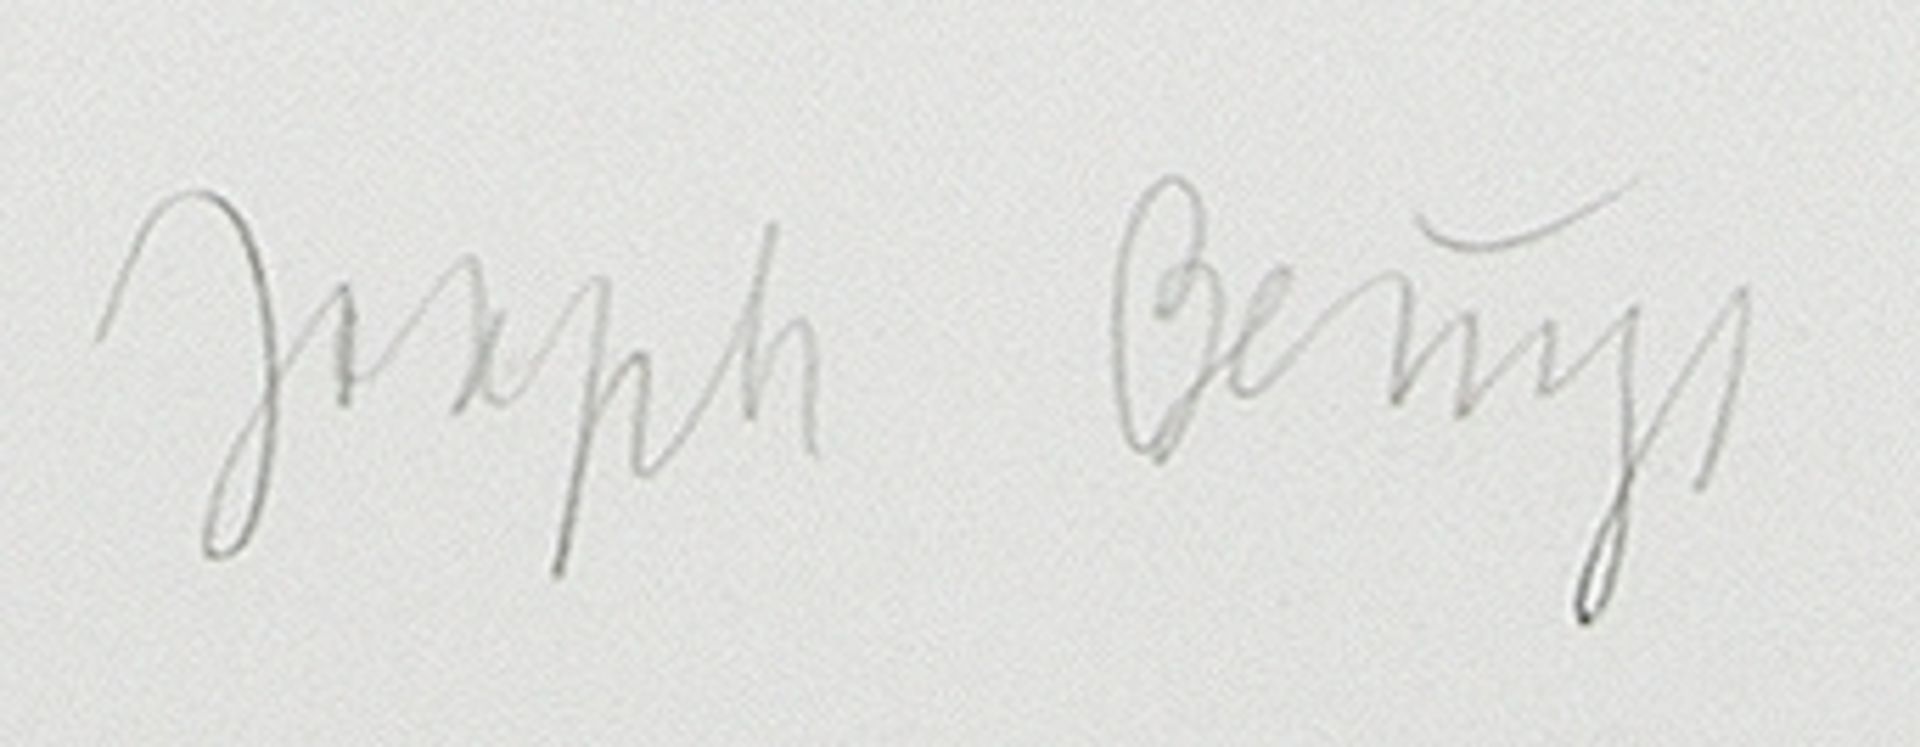 JOSEPH BEUYS(1921 KREFELD - 1986 DÜSSELDORF)BLACKBOARD I, II, UND III, 1980Drei Lithografien, - Bild 4 aus 4